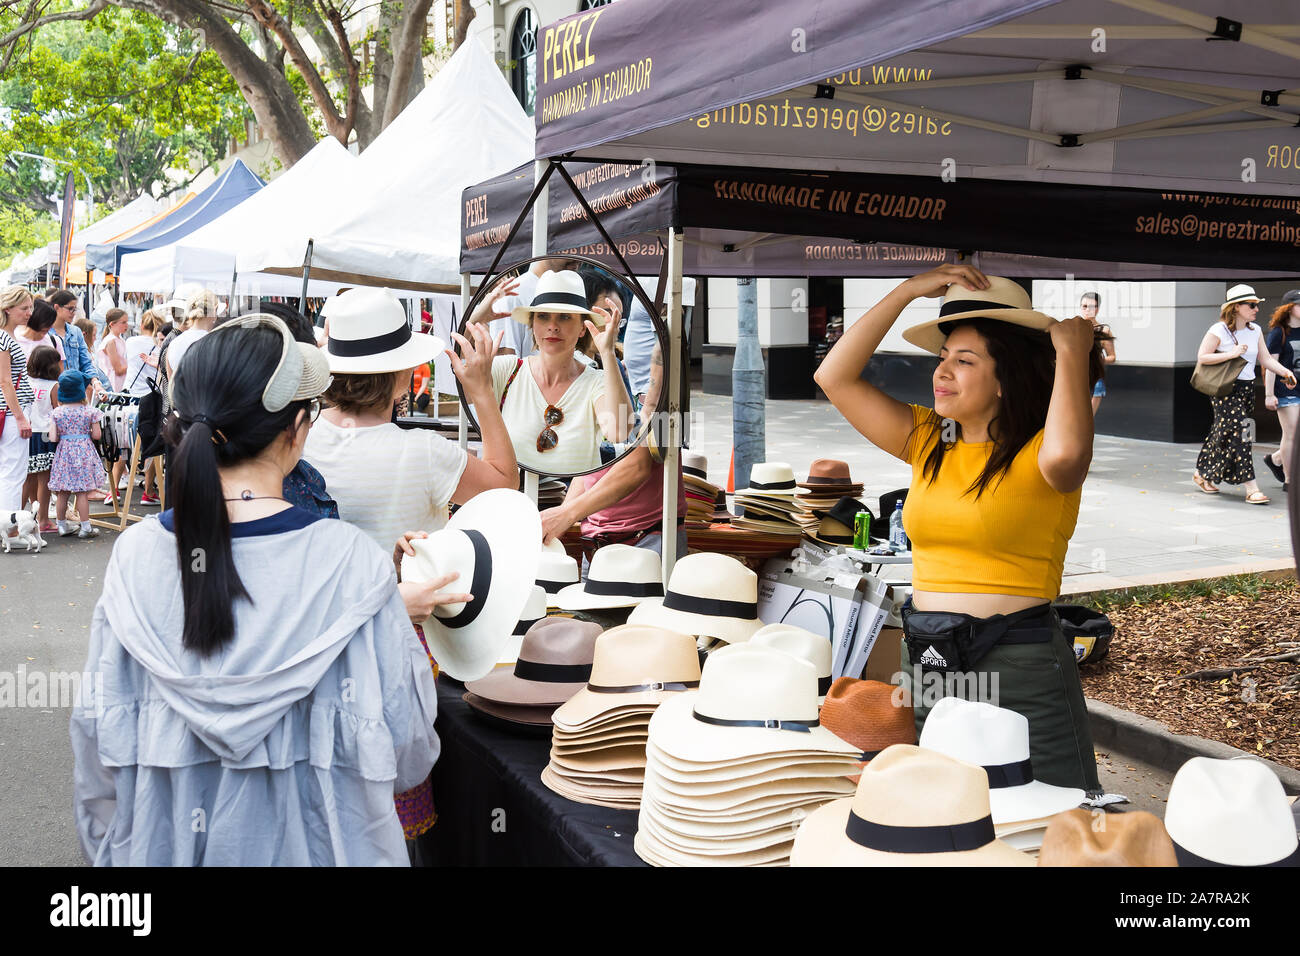 Double Bay Street Festival, Sydney, Australia. Hats handmade in Equador Stock Photo